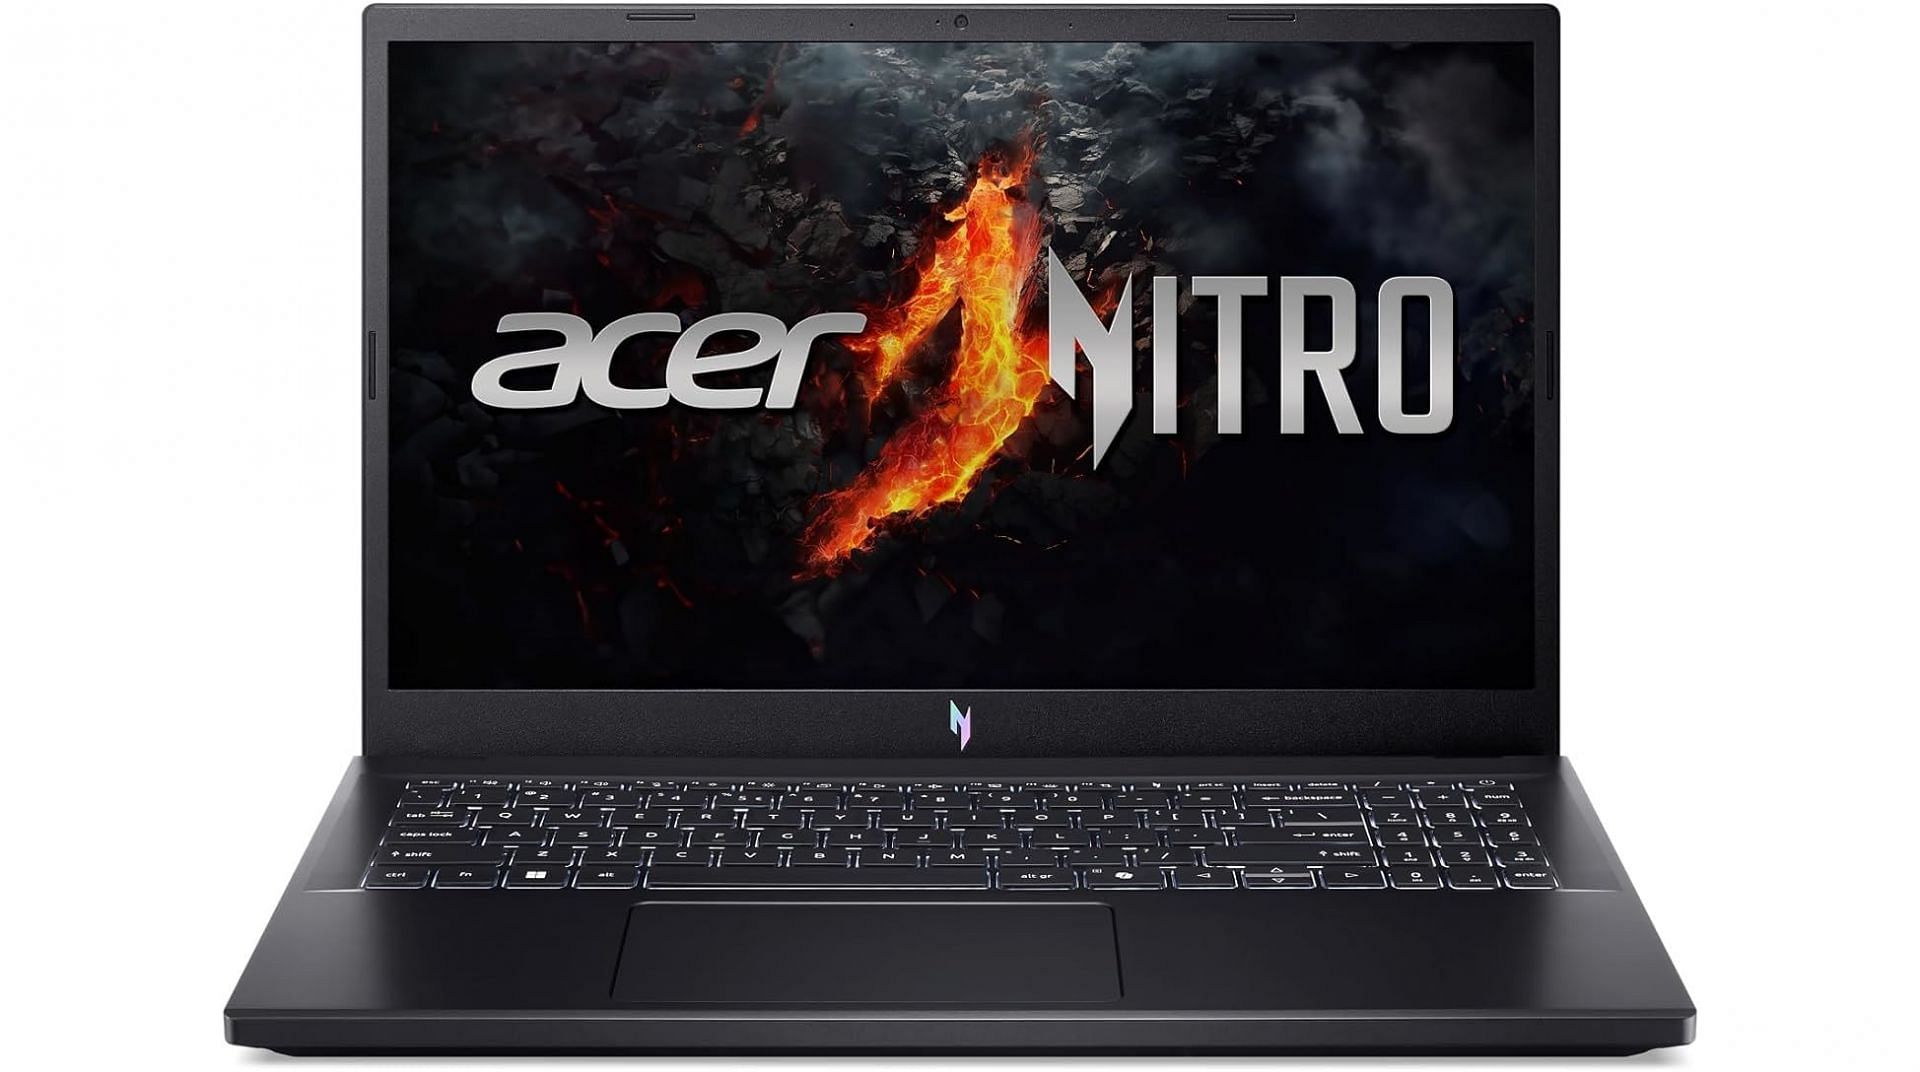 The Acer Nitro V ANV15-41-R5N6 gaming laptop (Image via Acer/Amazon)